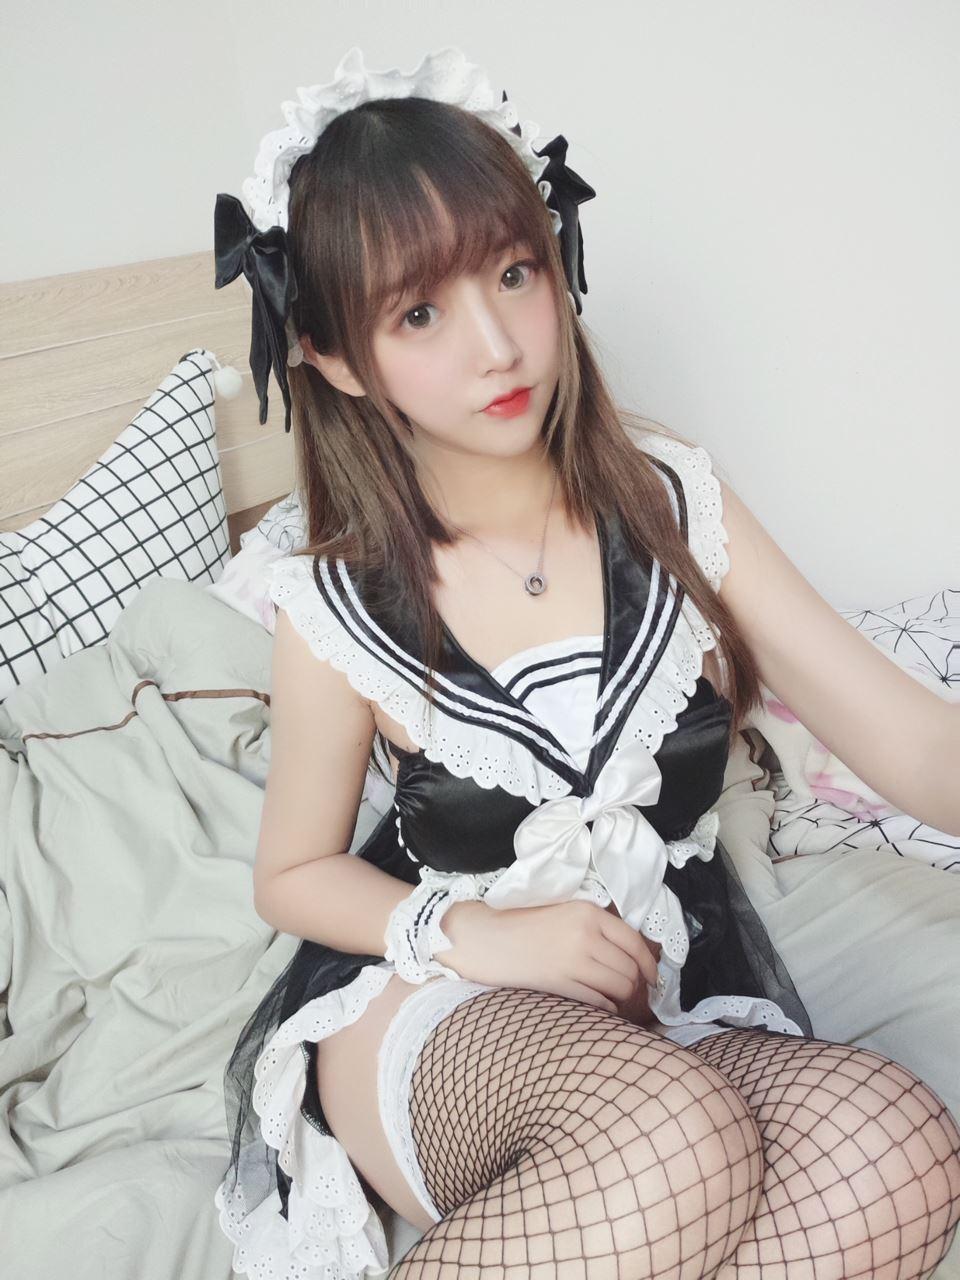 Cat Style Maid - Sexy Maid - 2.jpg